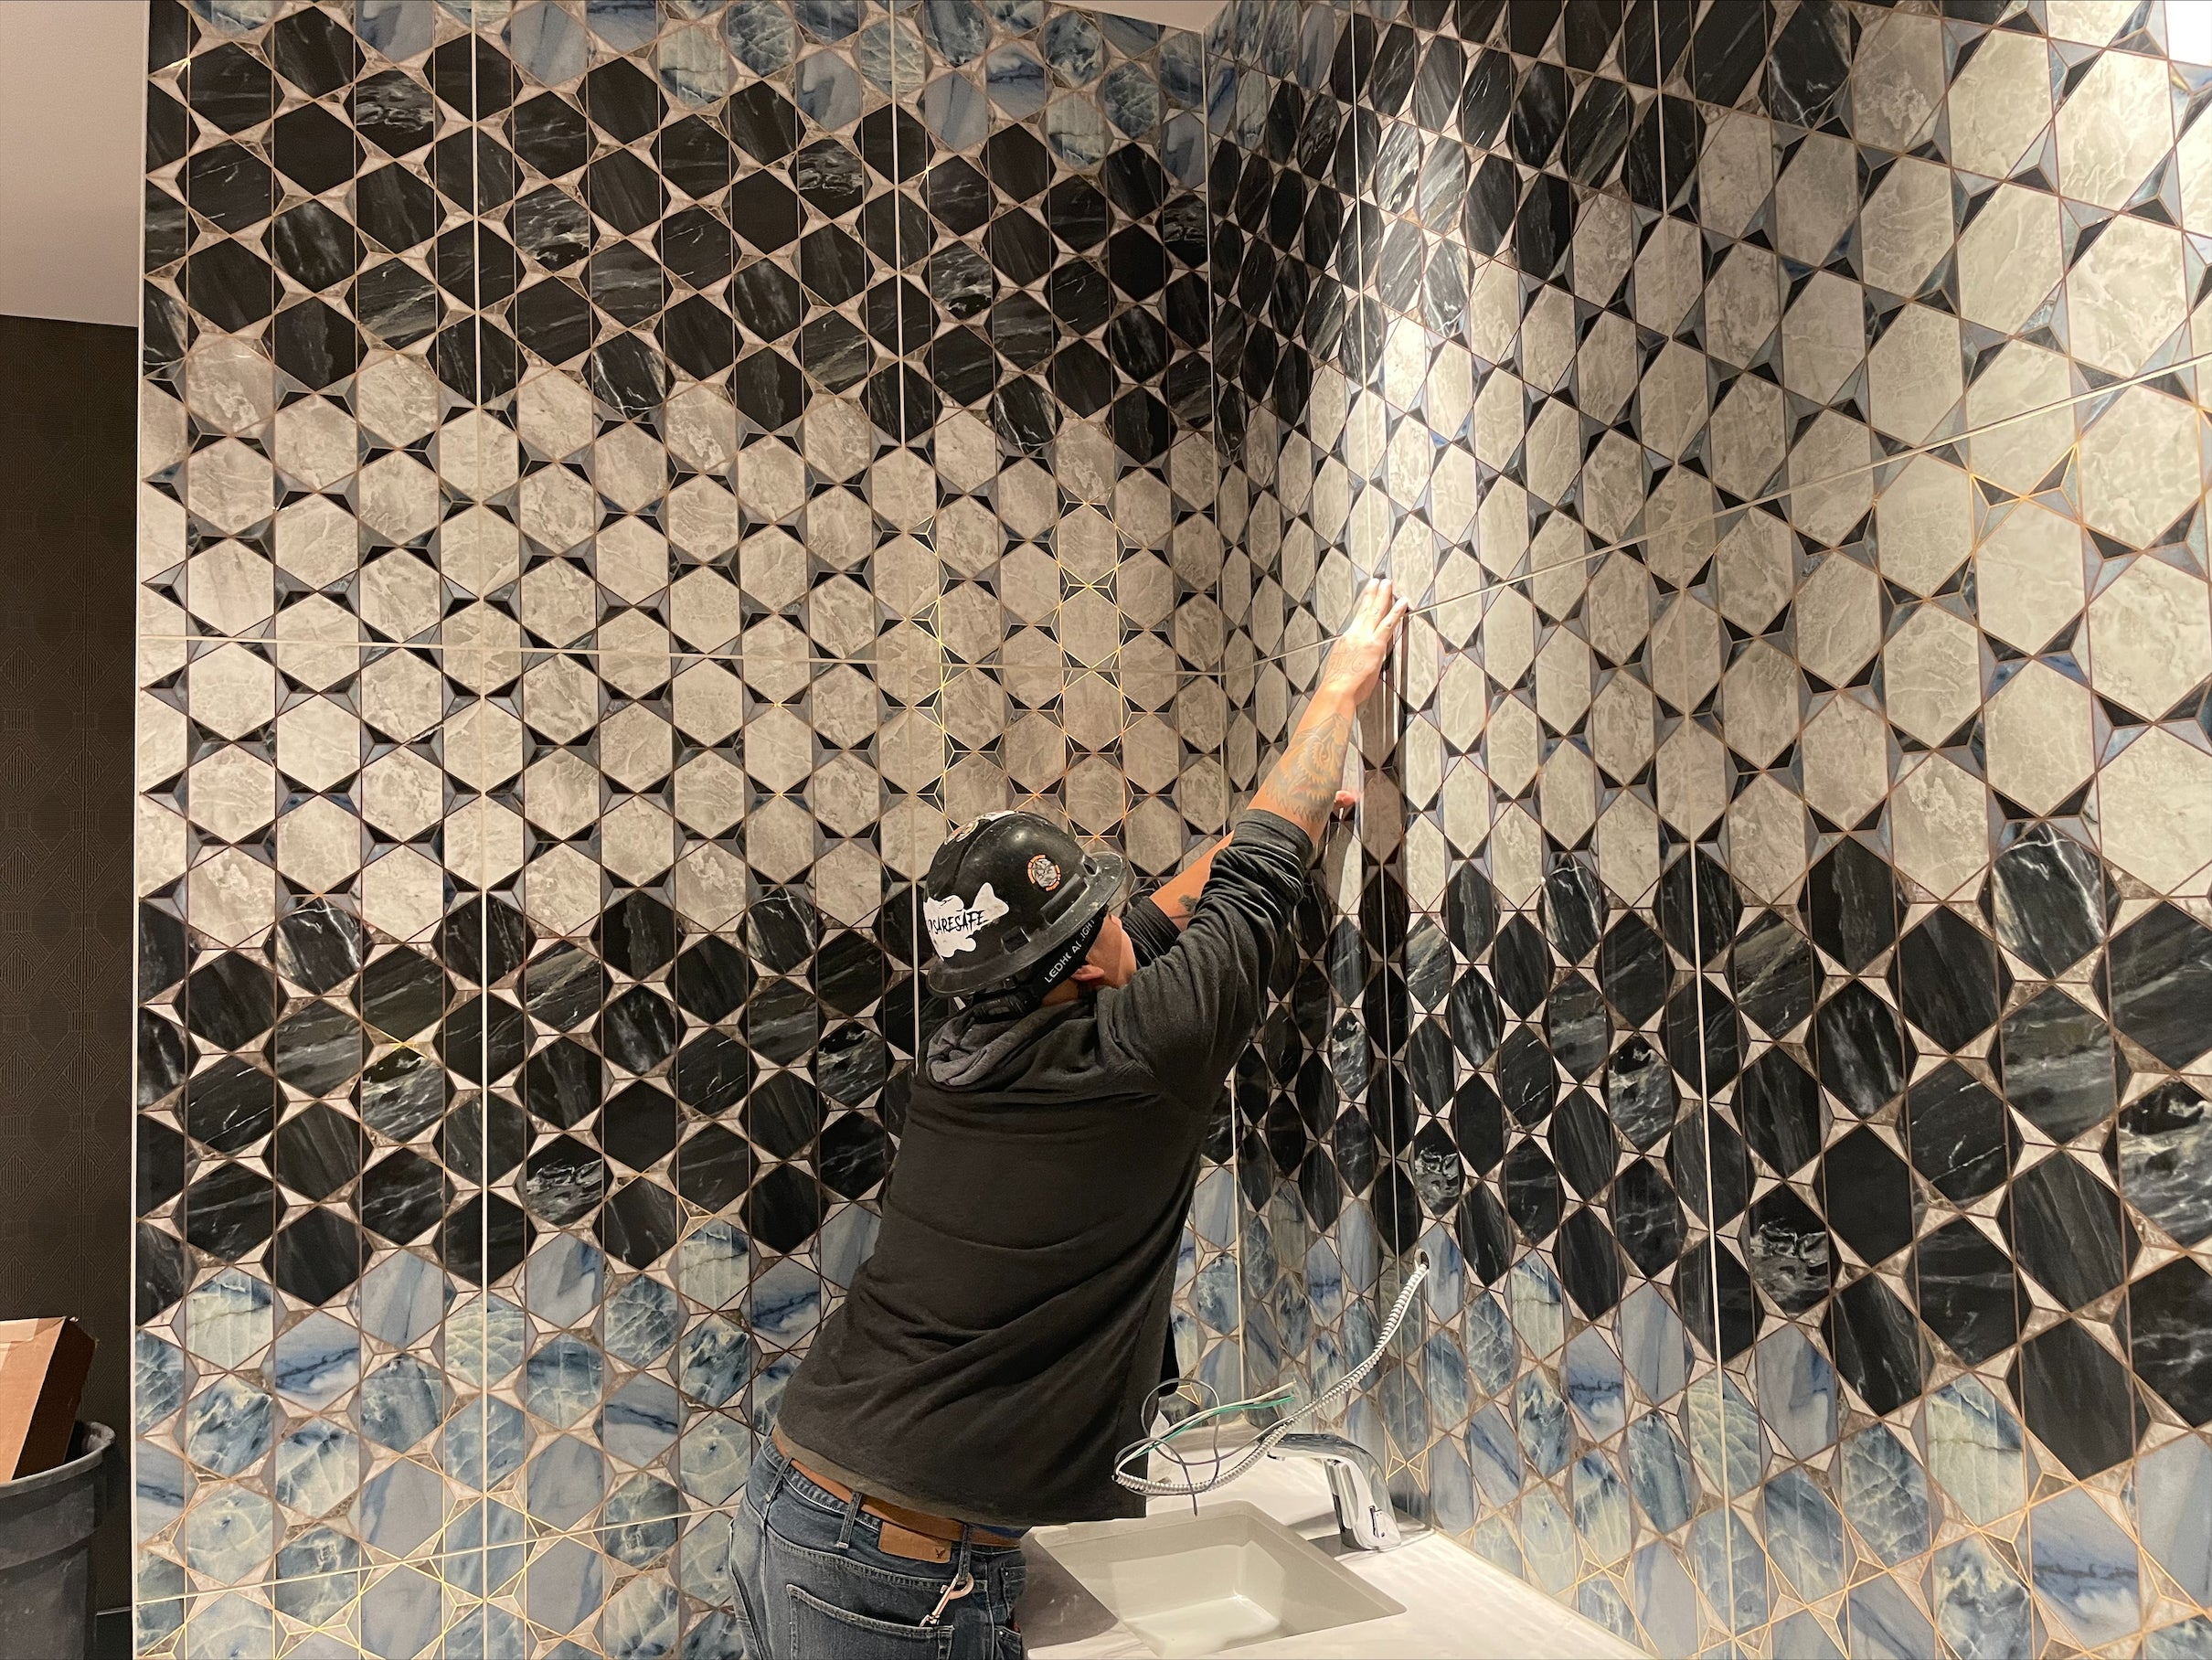 Rich Valenzuela inspects tile